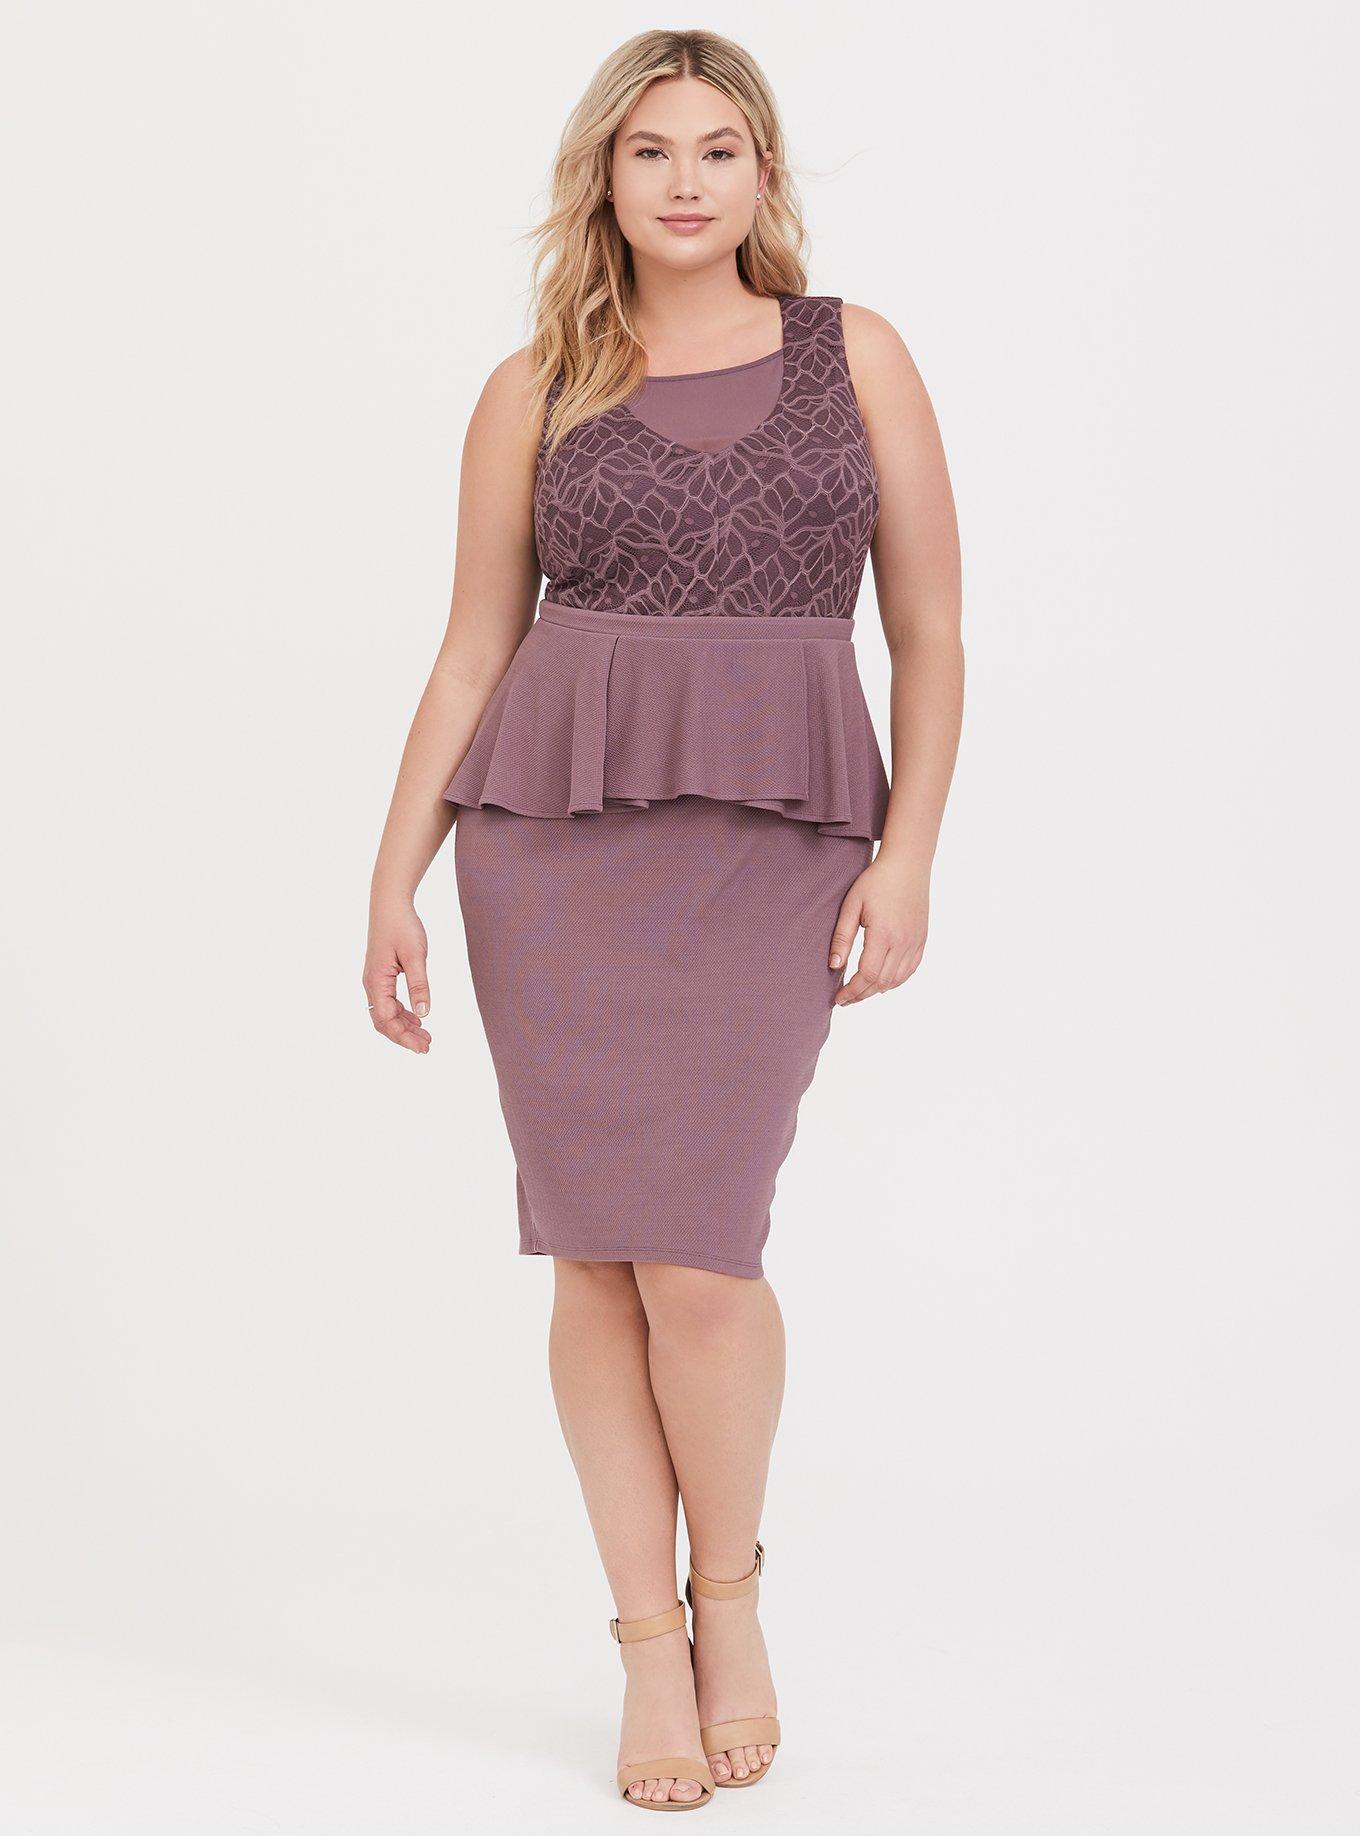 Plus Size - Mauve Purple Textured Scuba & Lace Peplum Dress - Torrid